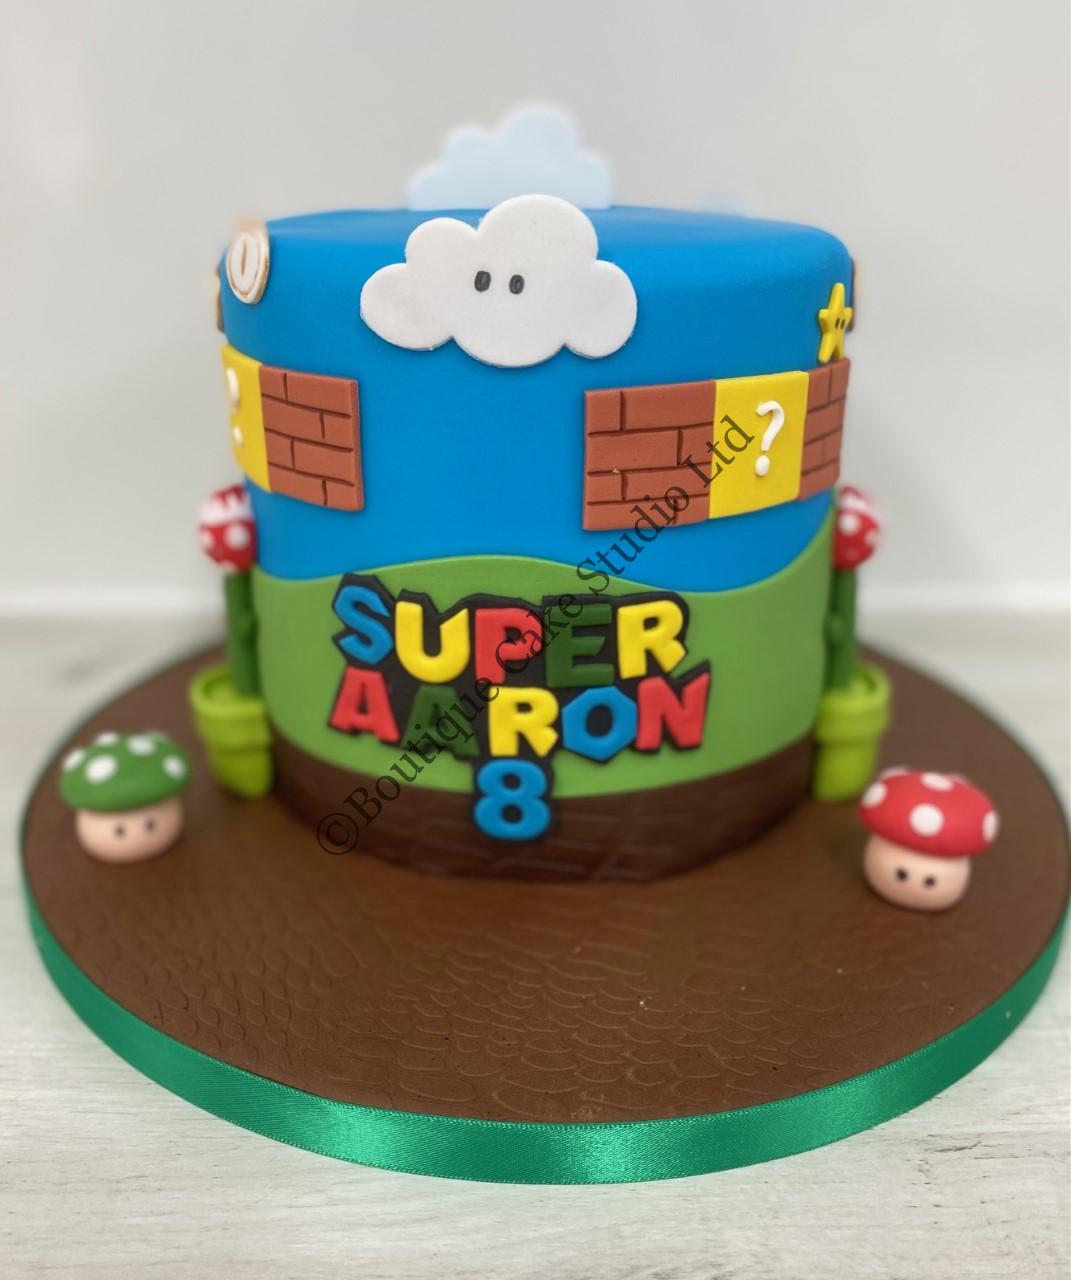 Super Mario themed Cake